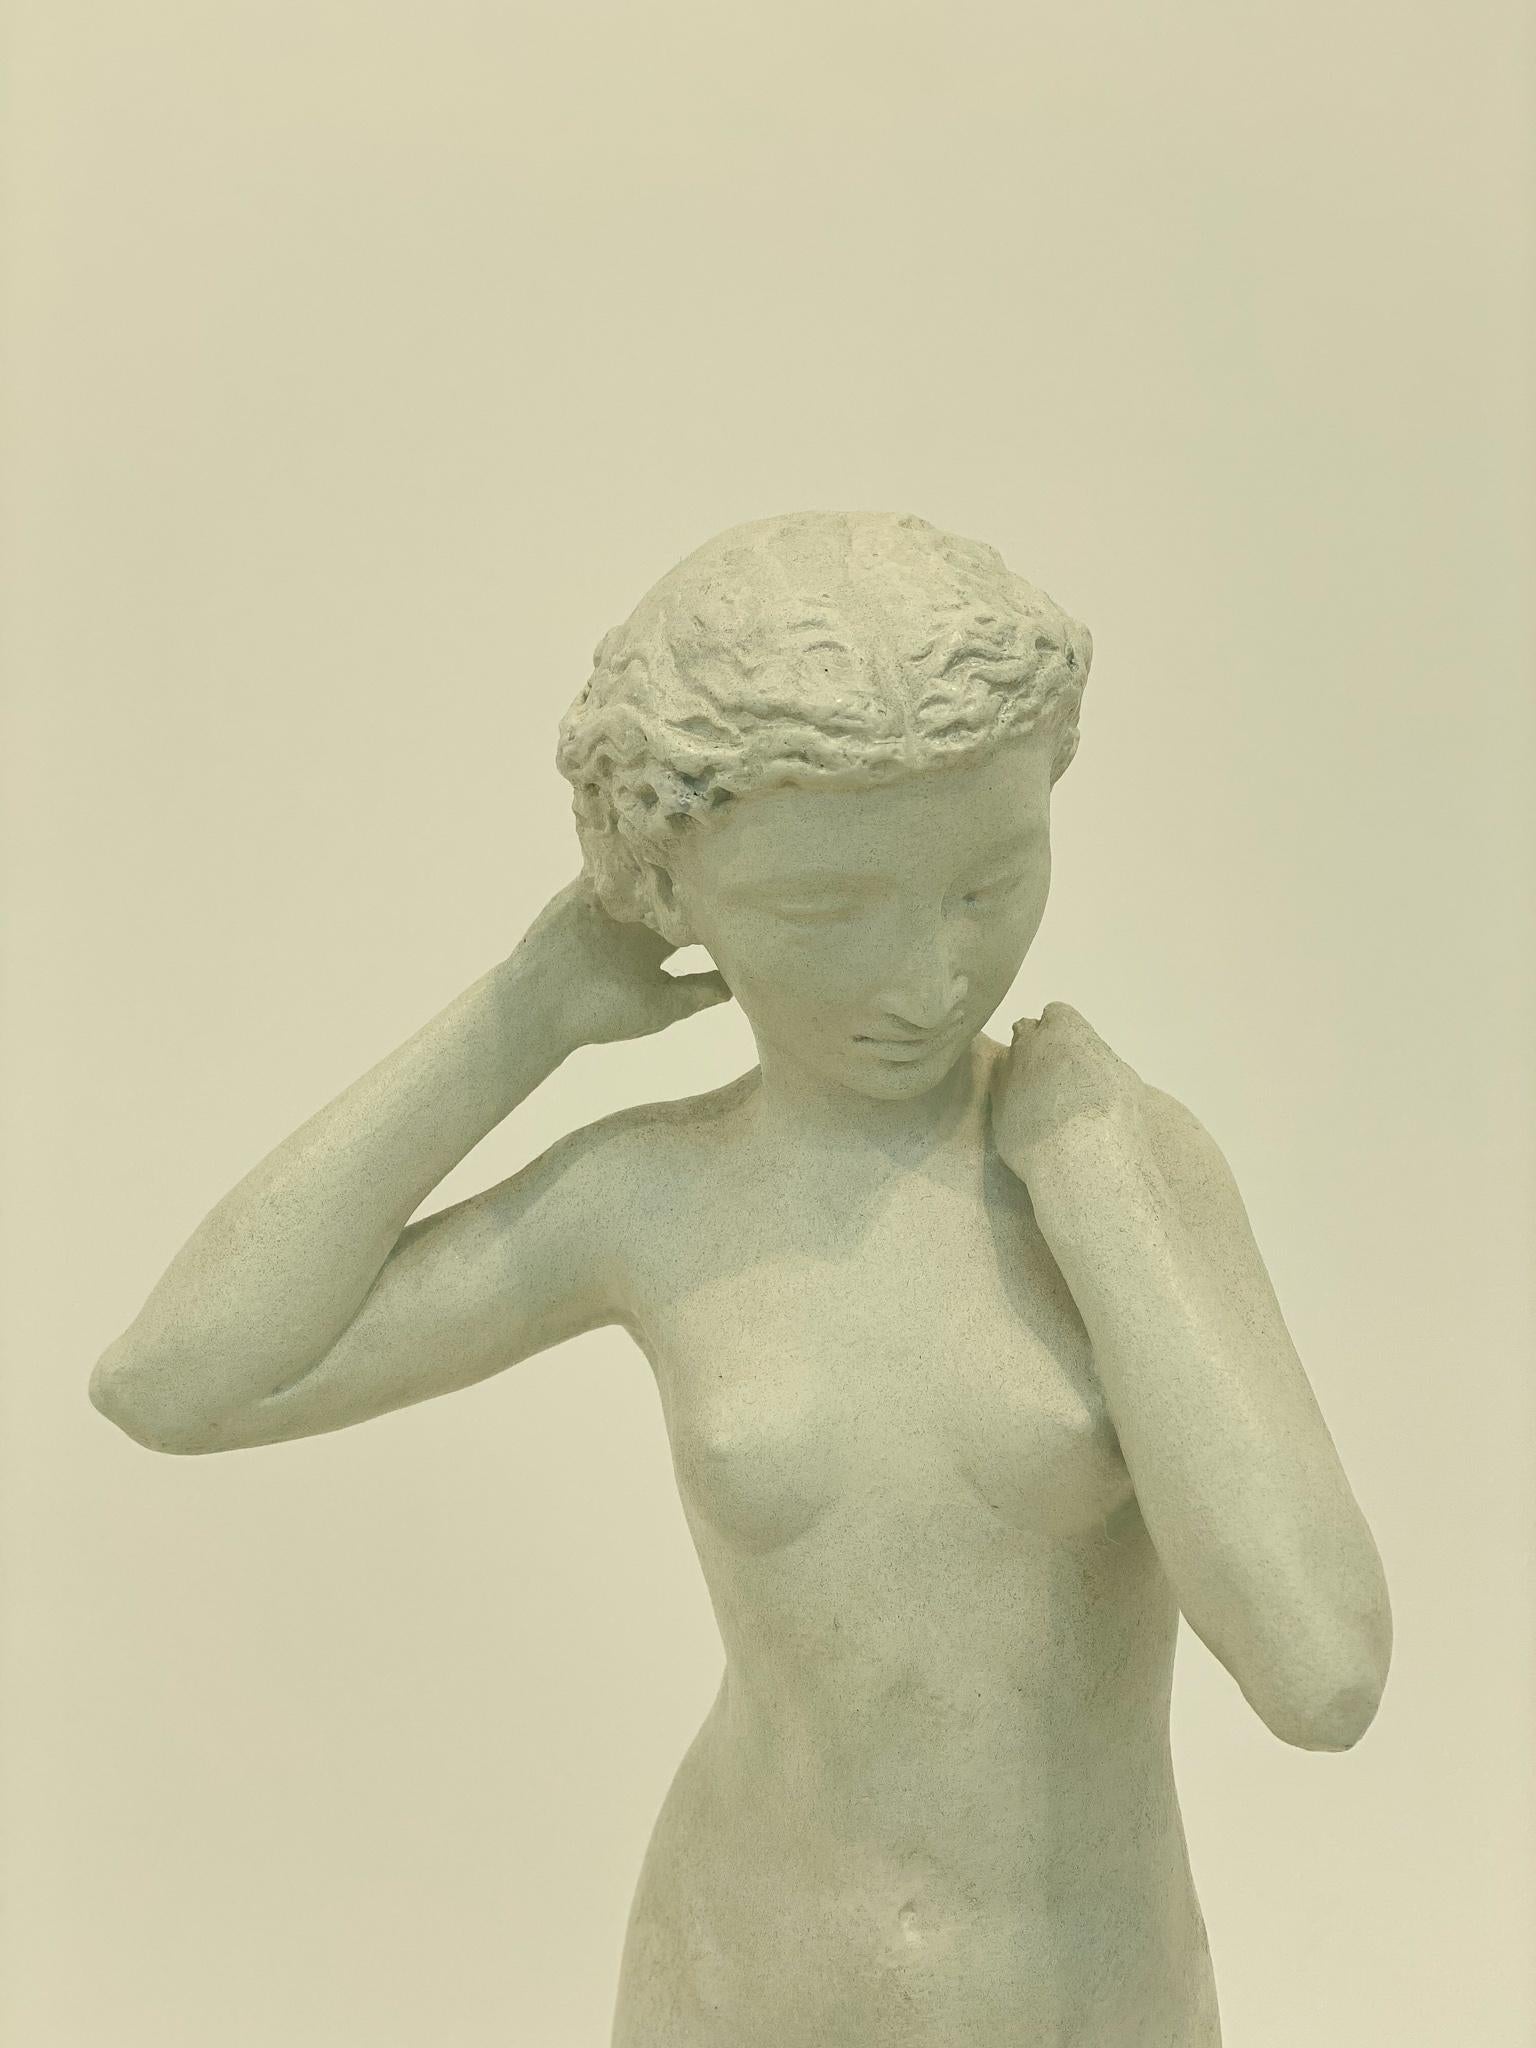 Classical Roman Bronze Sculpture with White Patina, Steven Strumlauf